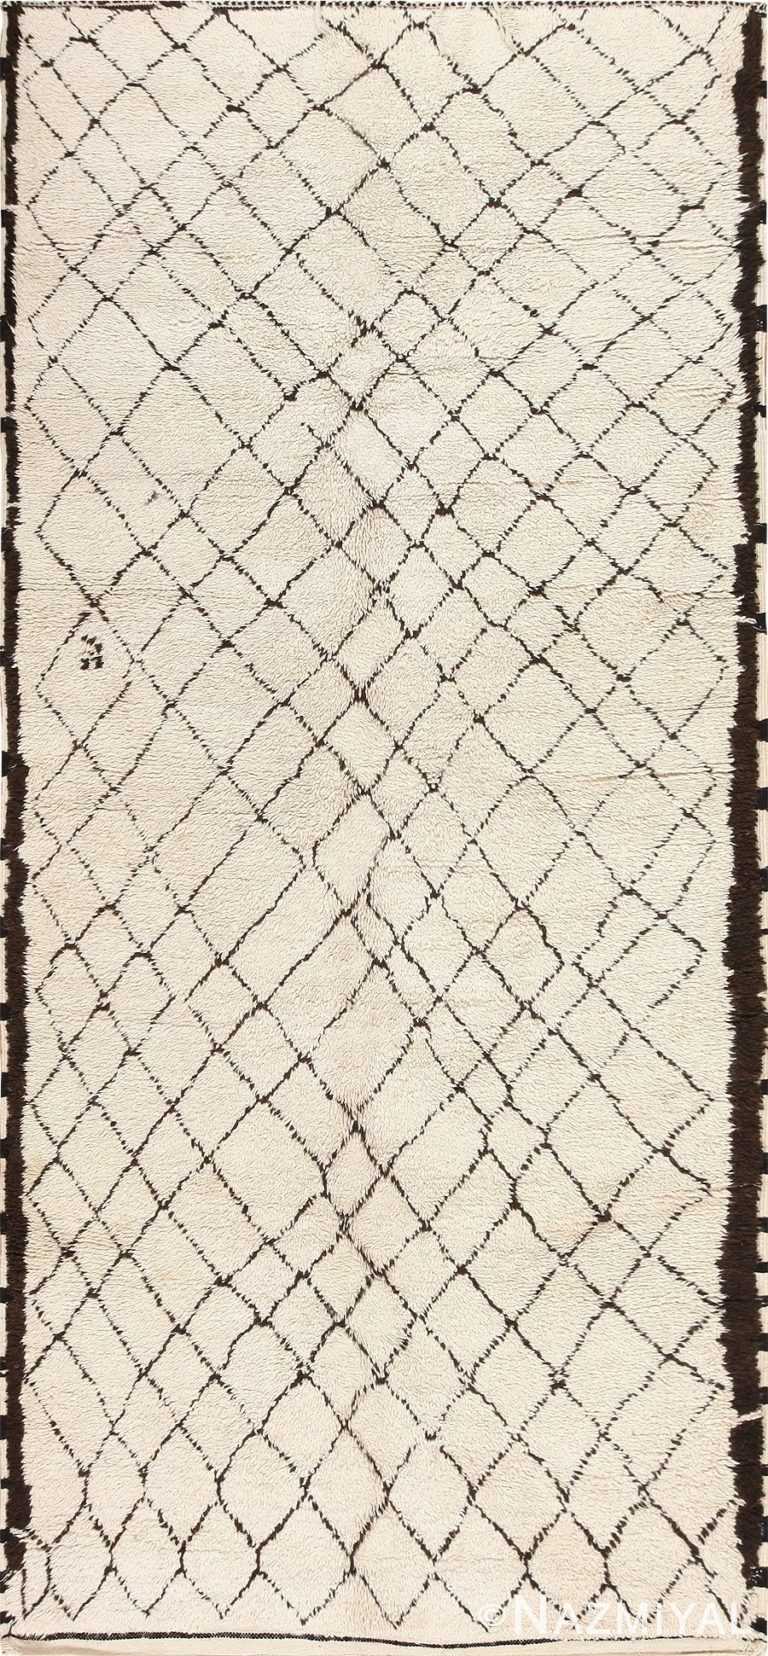 Vintage Moroccan Carpet 47934 Detail/Large View